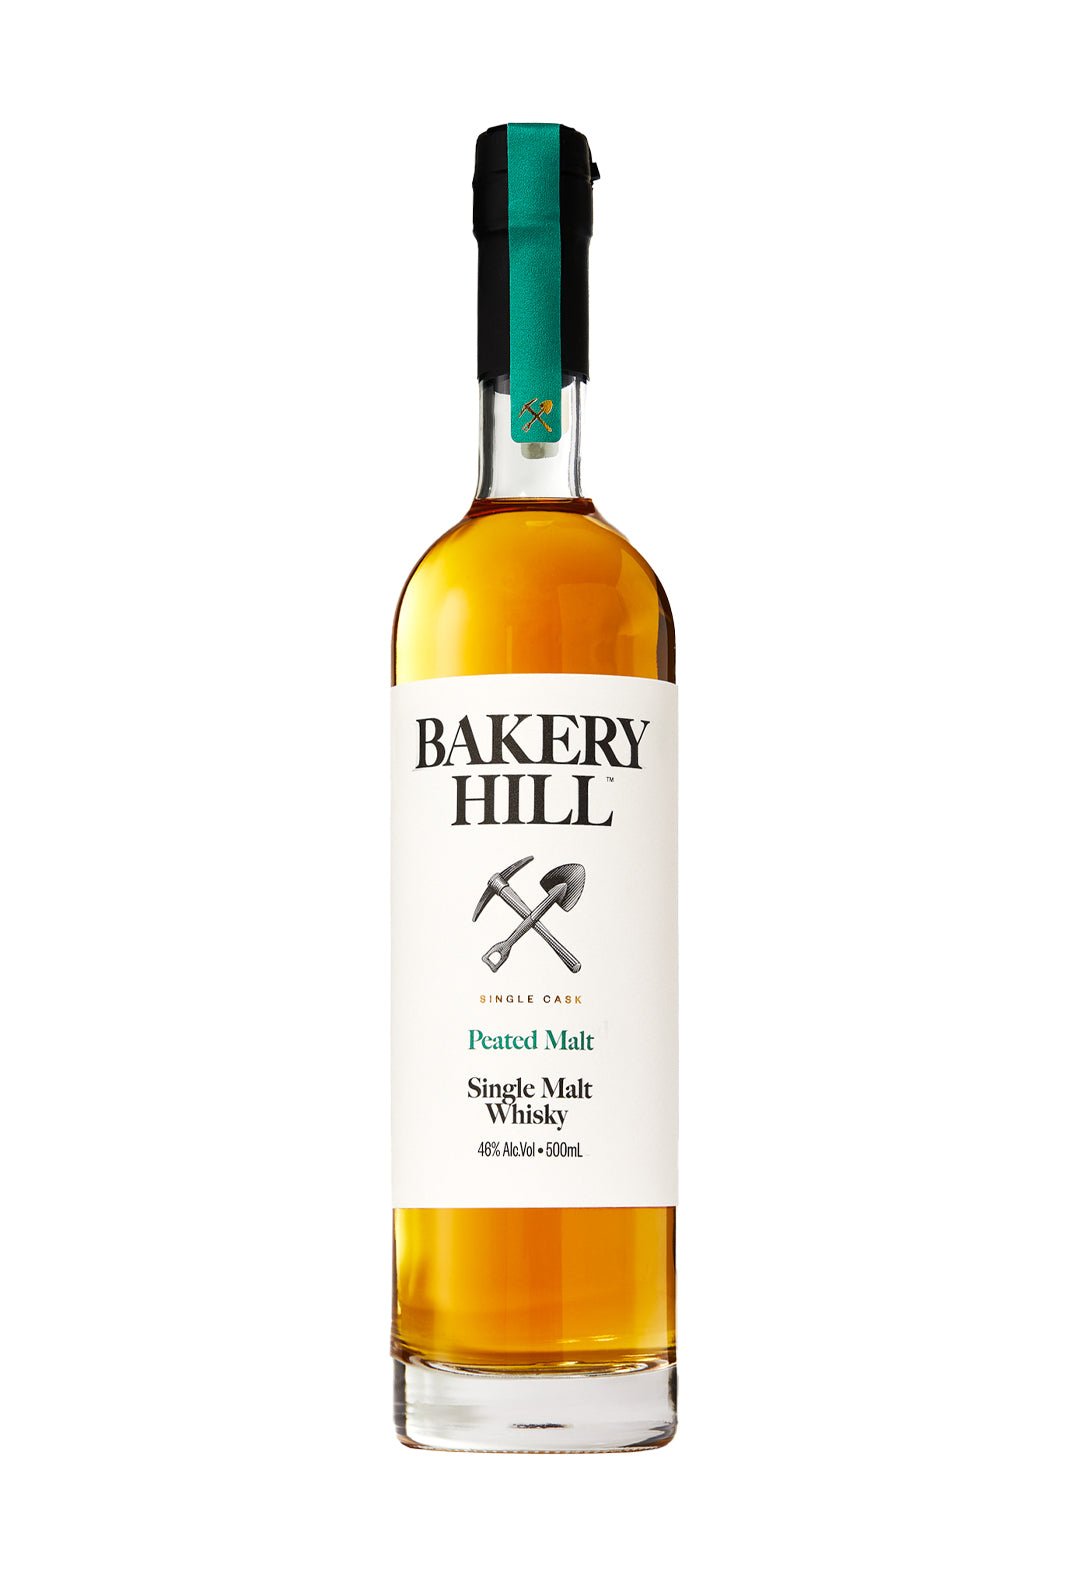 Bakery Hill Peated Malt Cask Strength 60% 500ml | Whisky | Shop online at Spirits of France